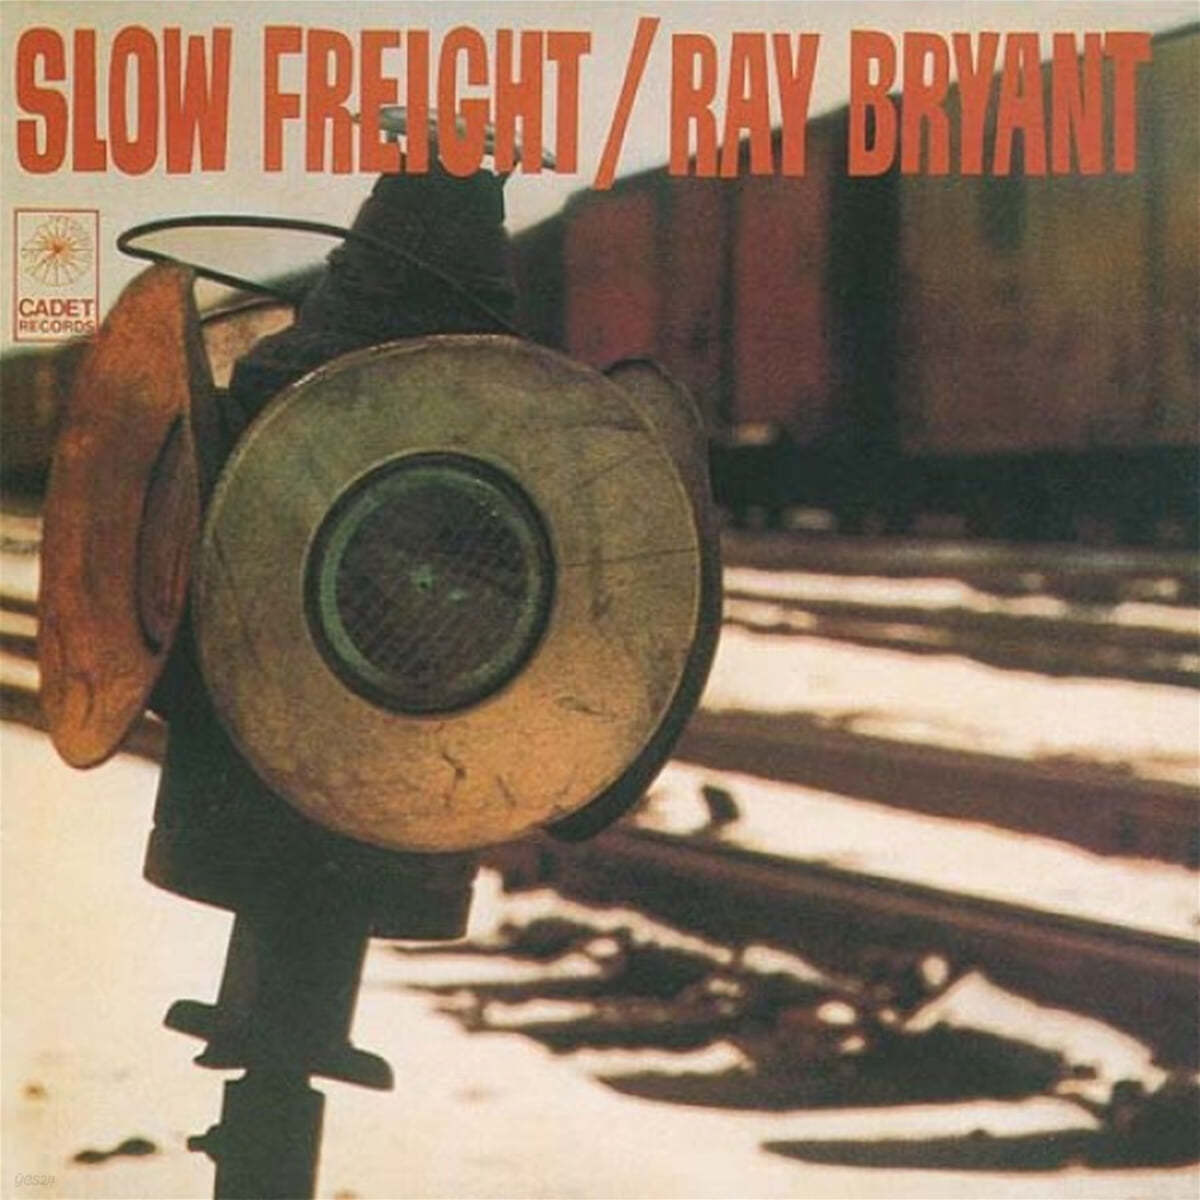 Ray Bryant (레이 브라이언트) - Slow Freight